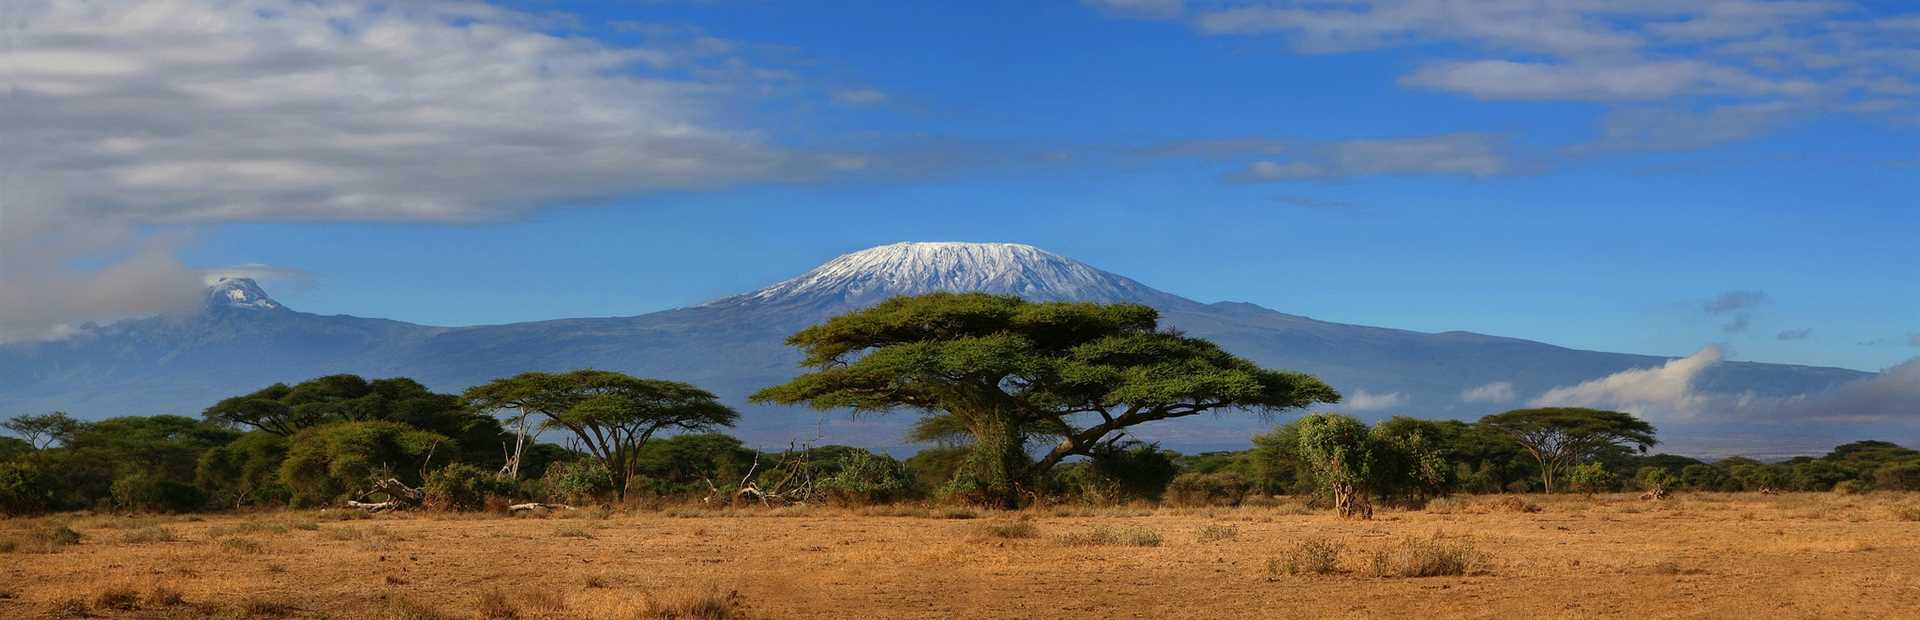 Tanzania - Mount Kilimanjaro Climb